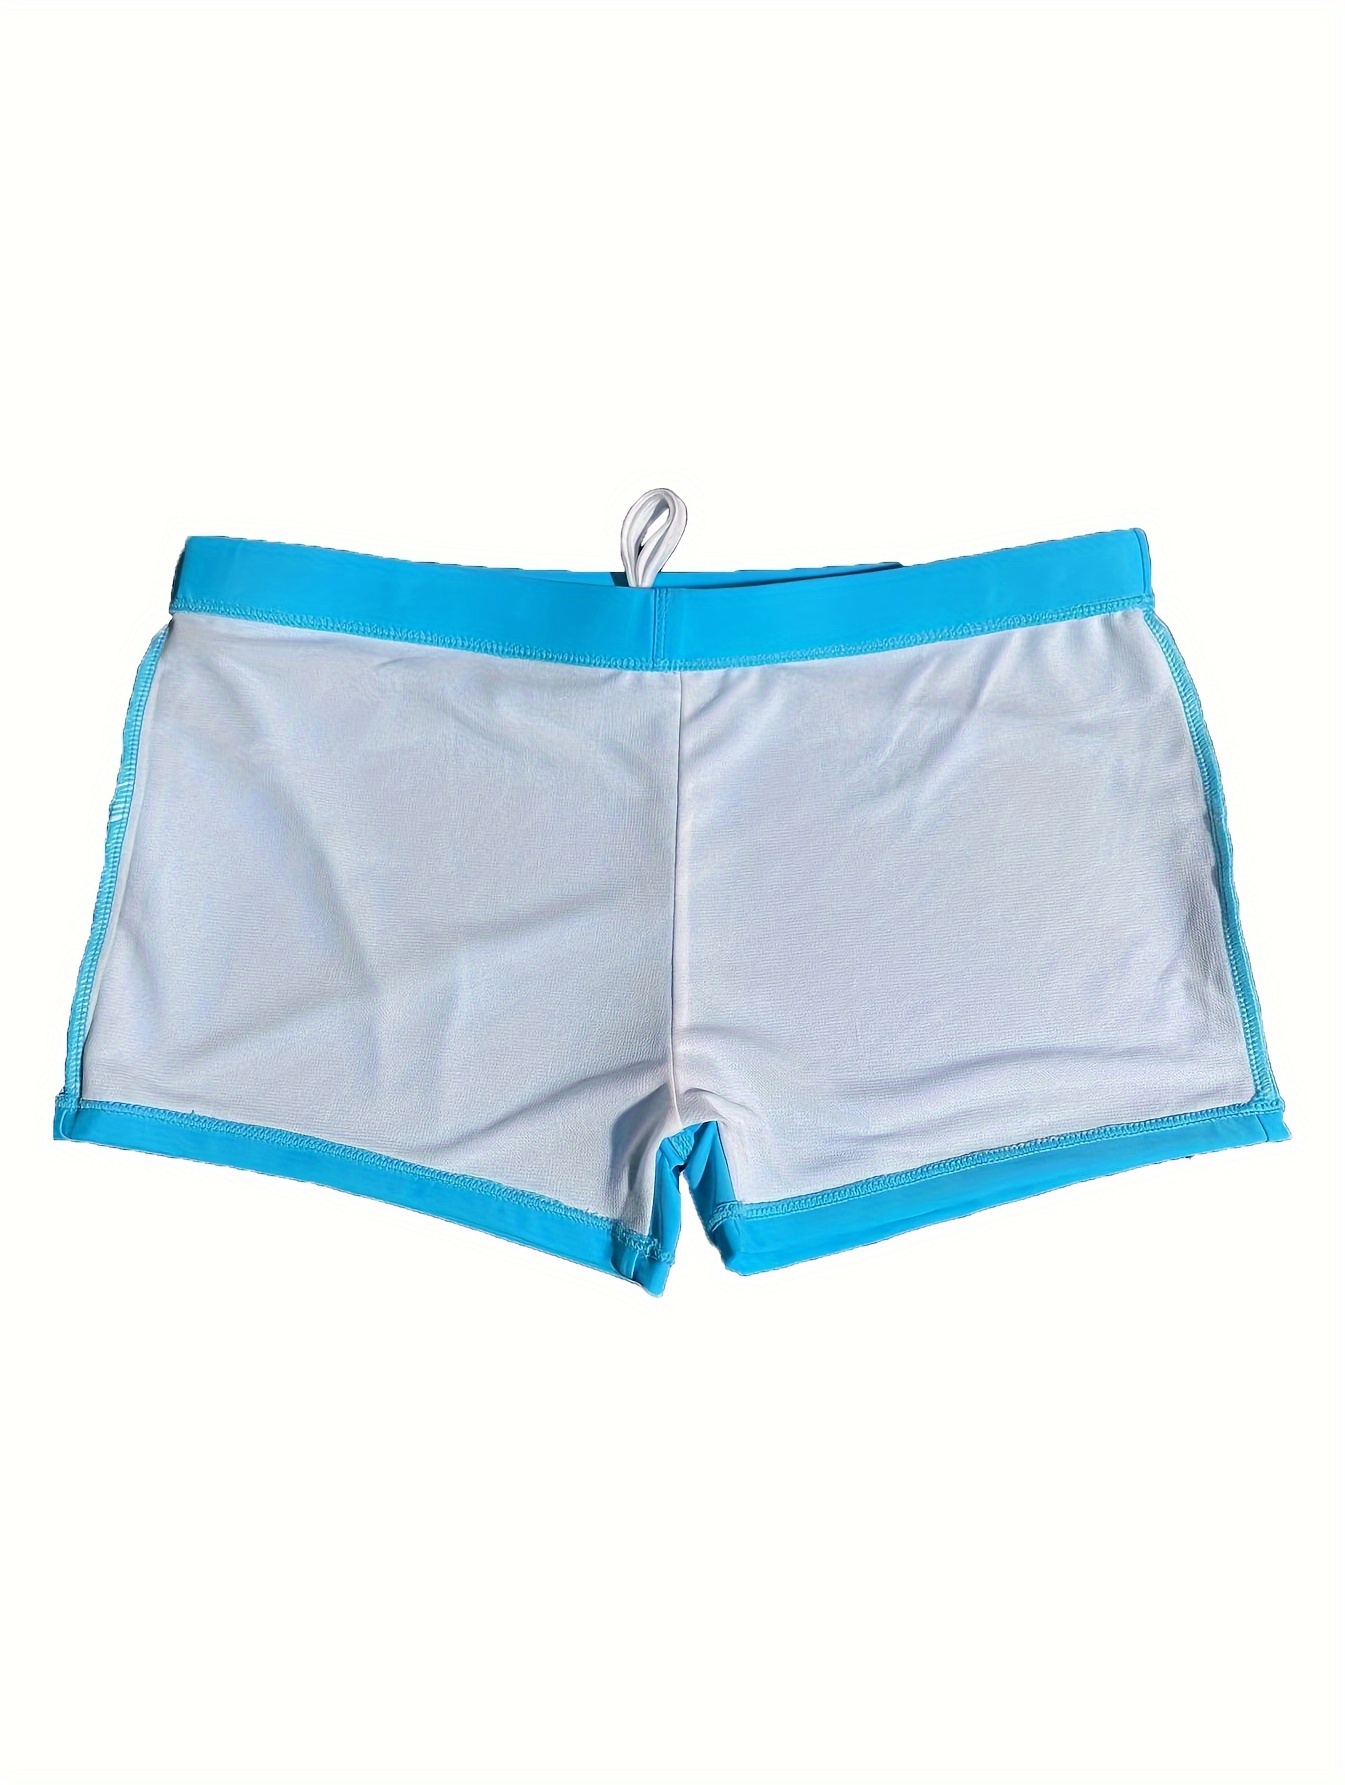 Men's Sexy Underwear Swim Beach Trunks Boxers Briefs Swimming Swimwear